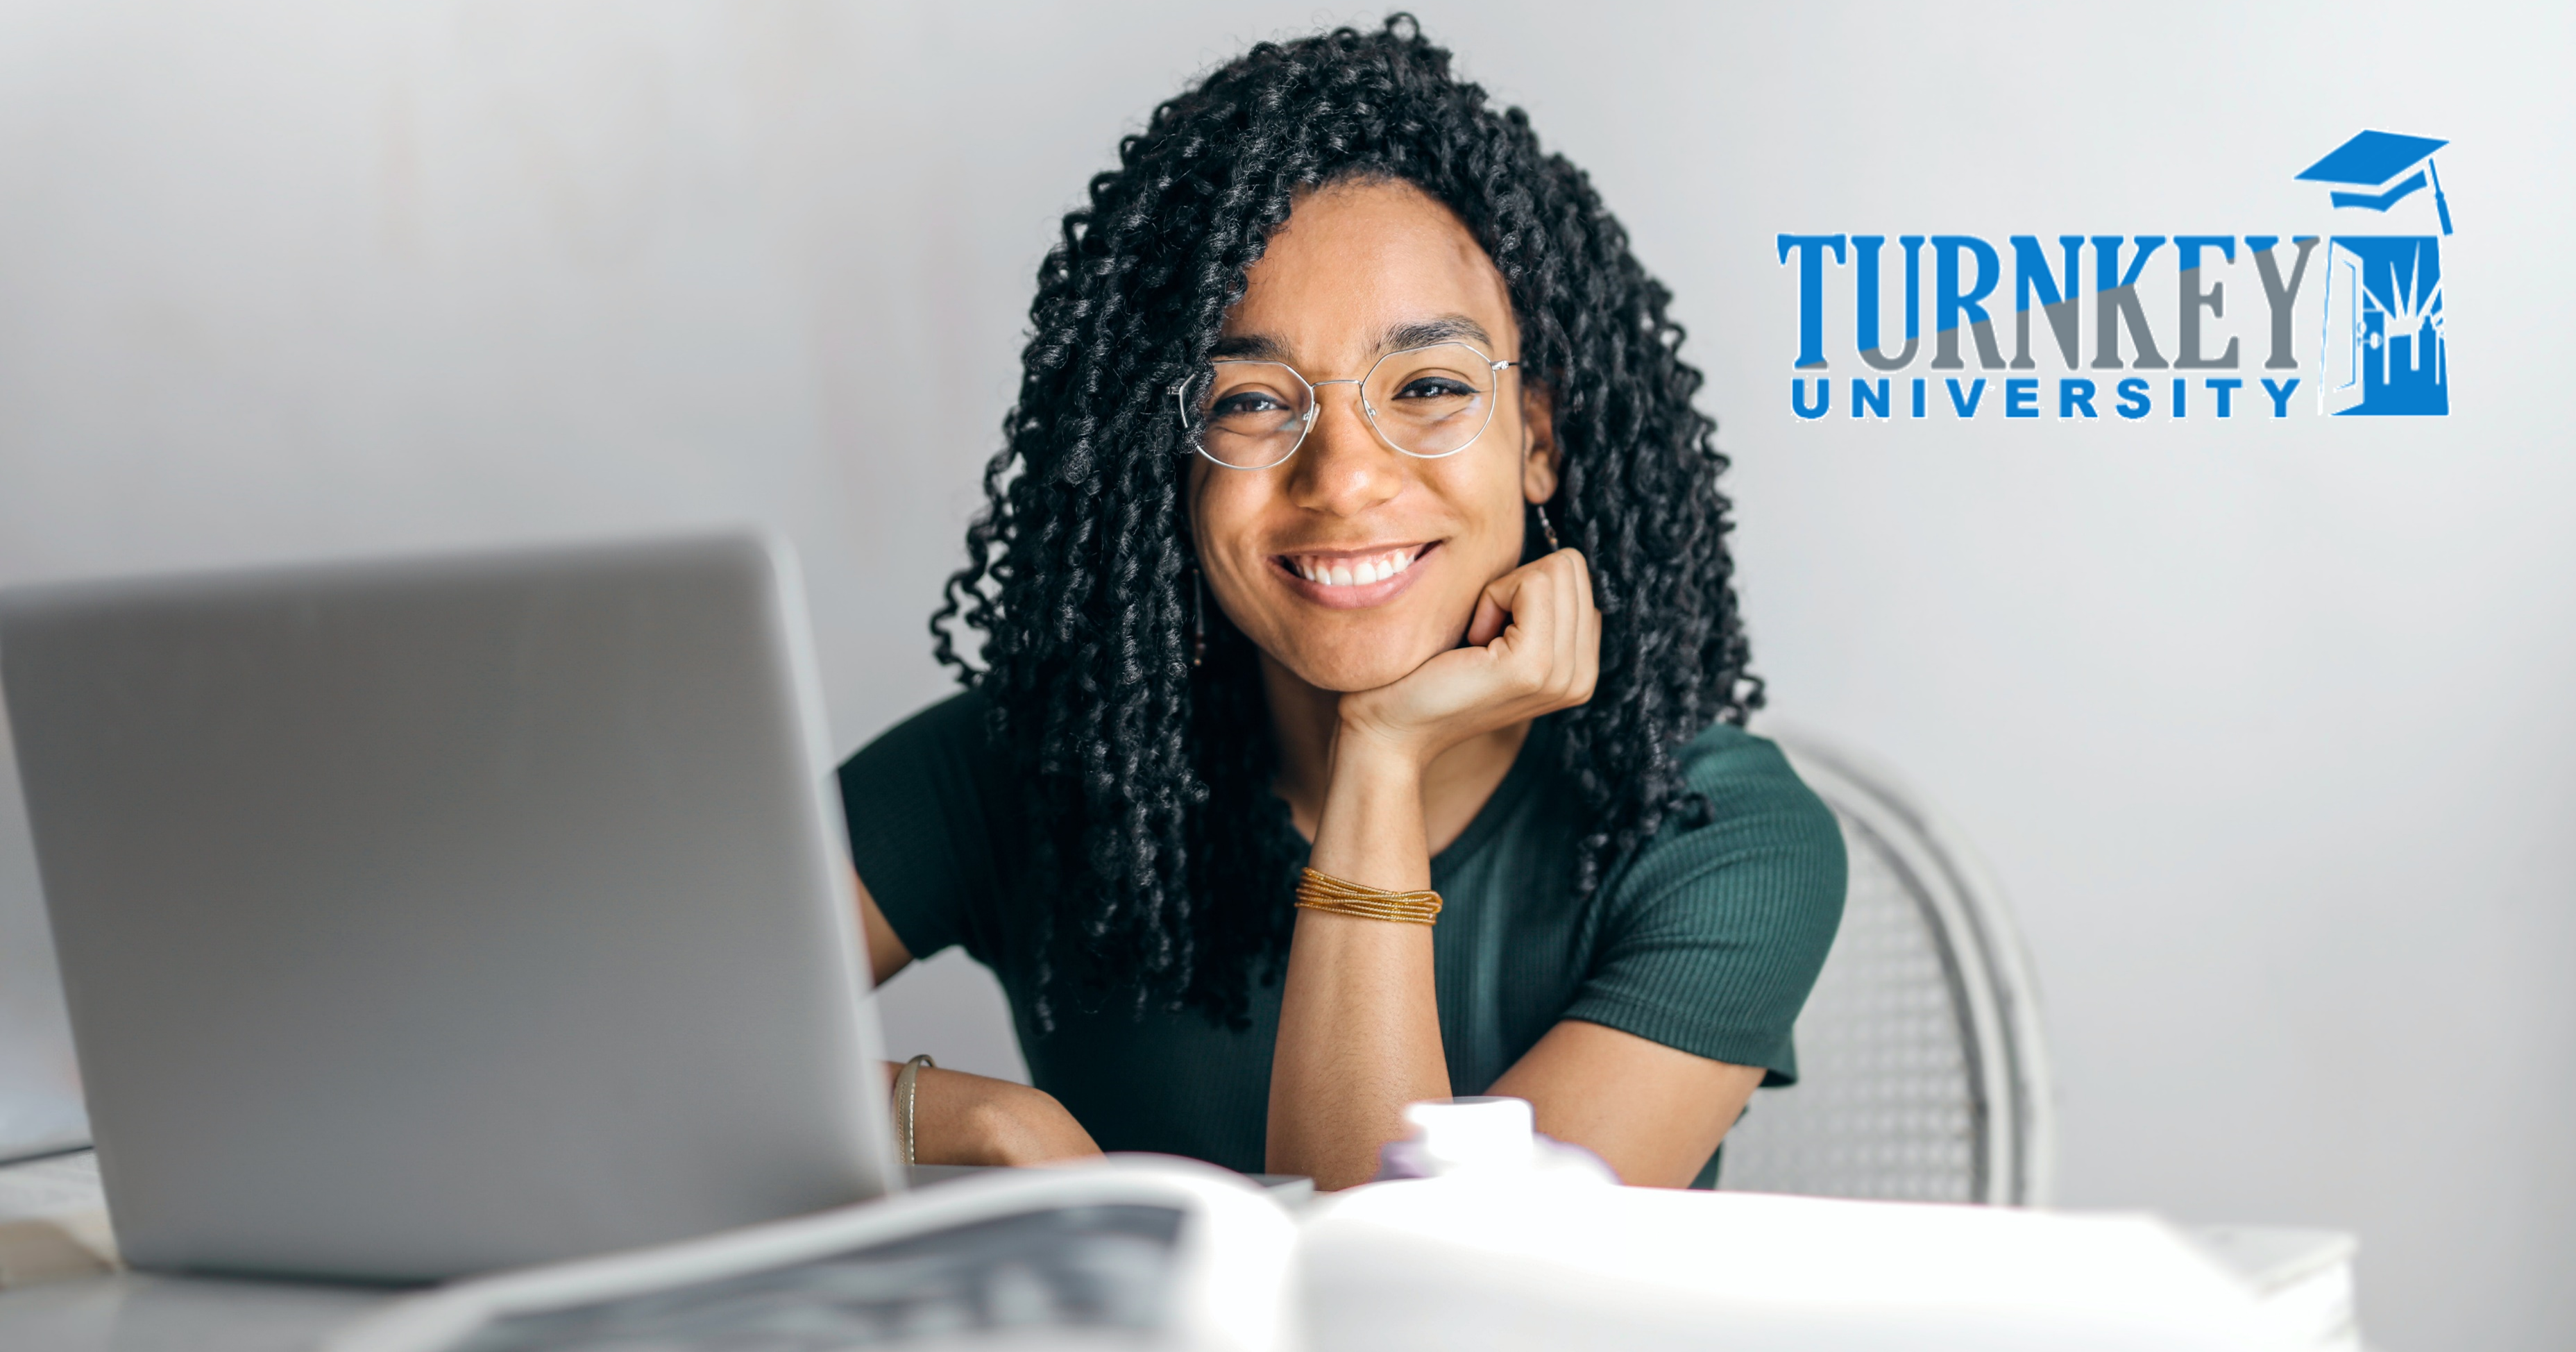 Turnkey University Website Header